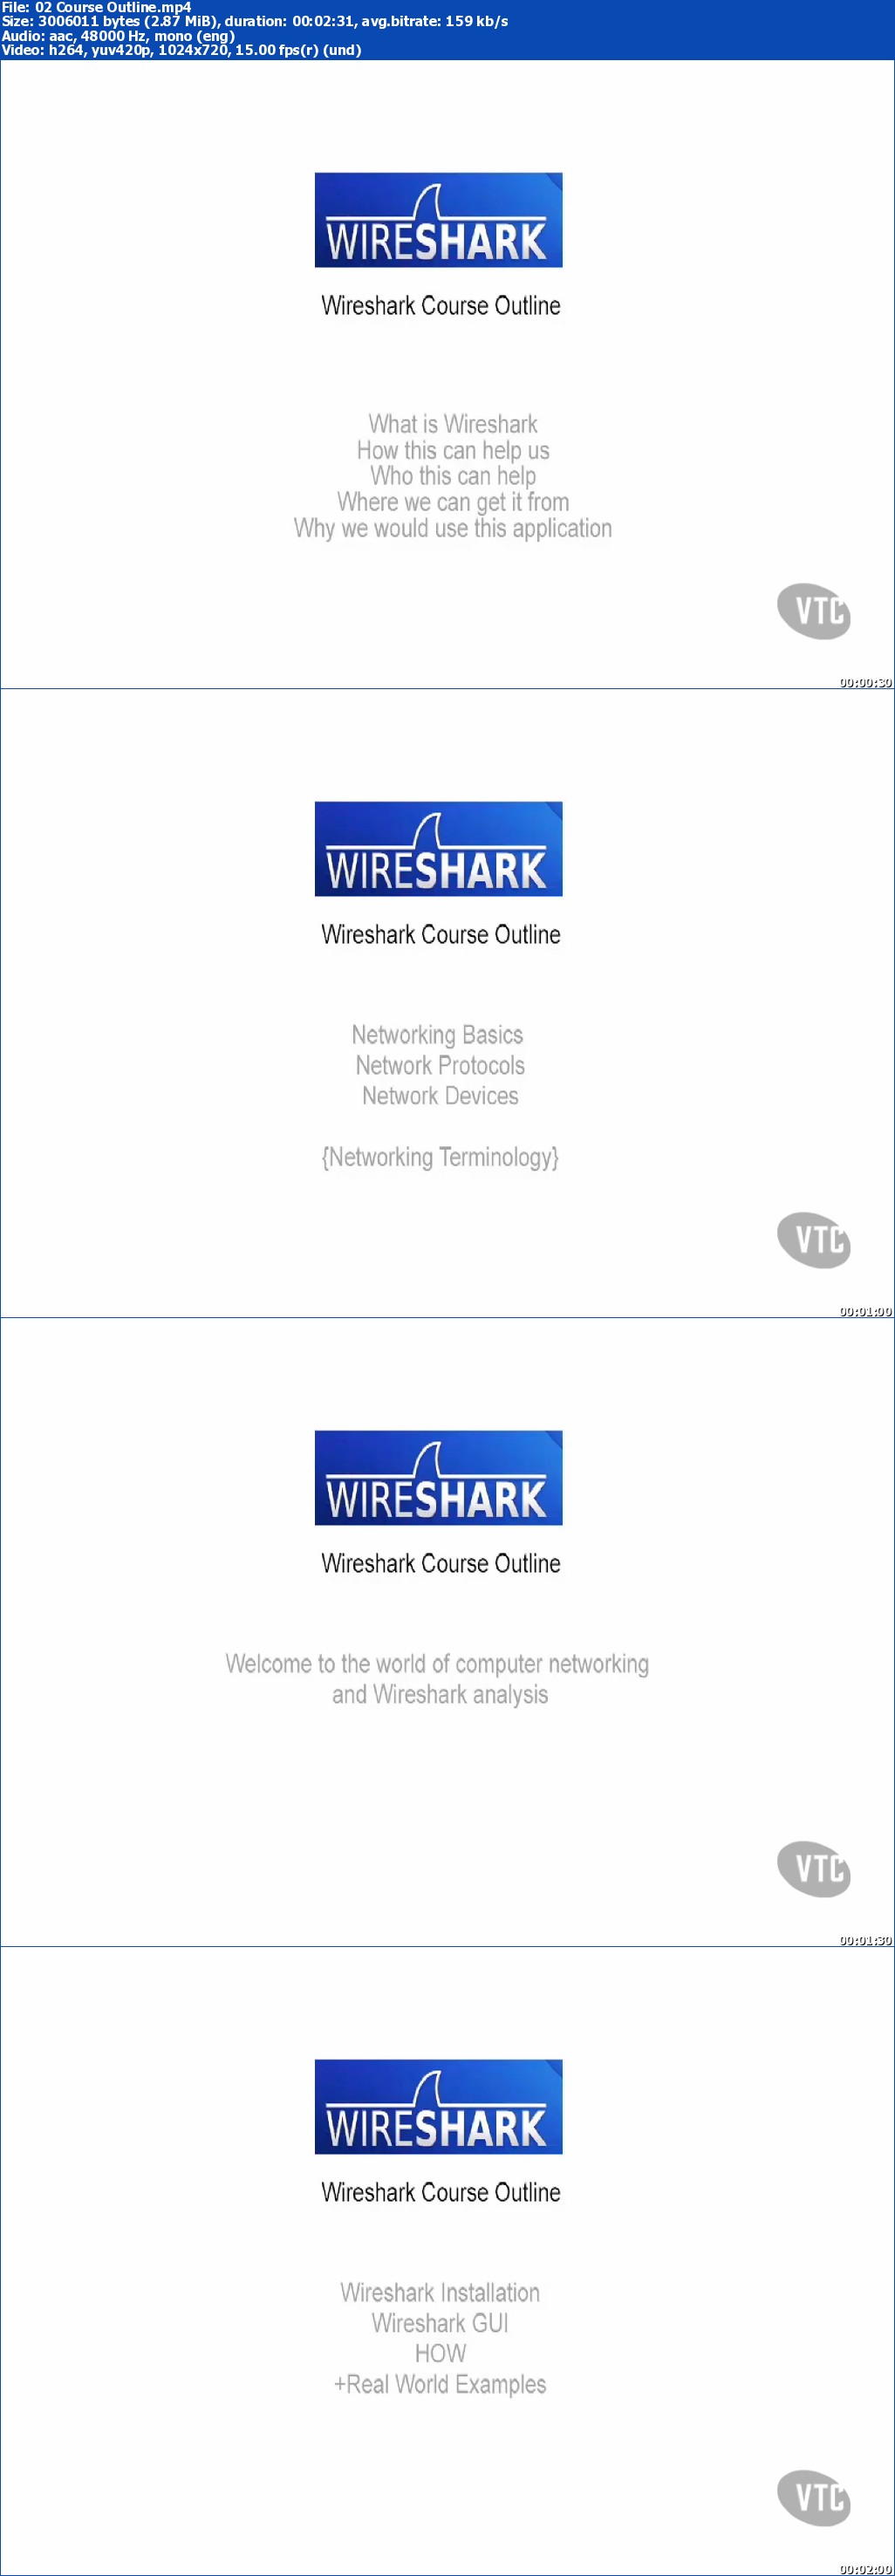 VTC - Wireshark Course